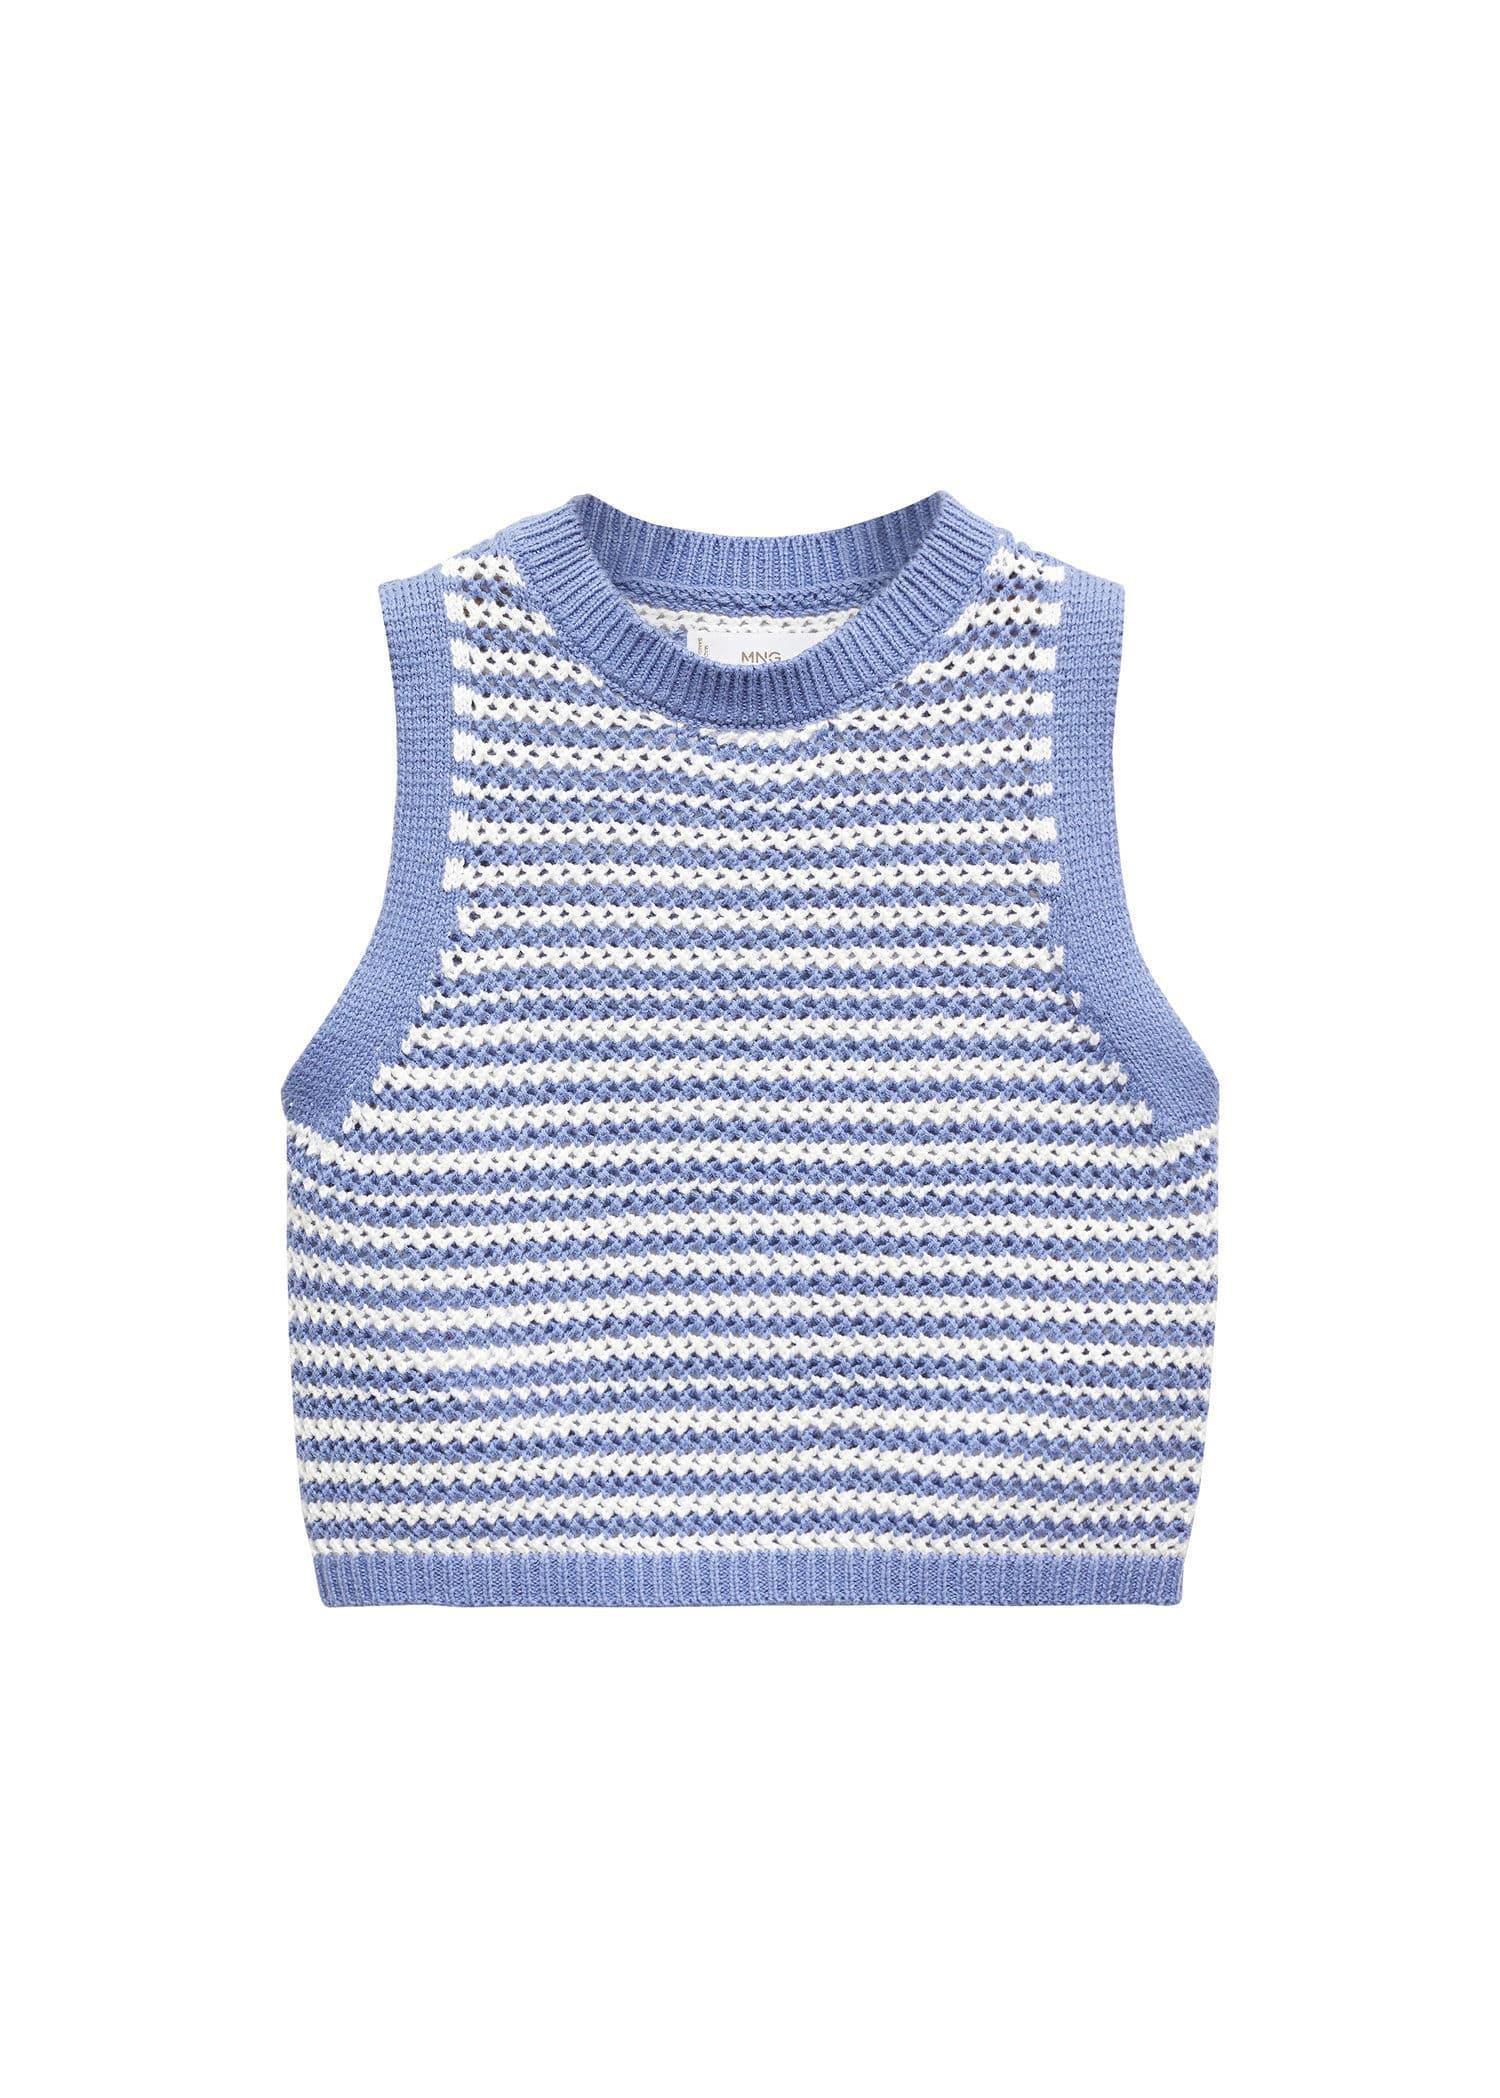 Mango - Blue Striped Knitted Gilet, Kids Girls